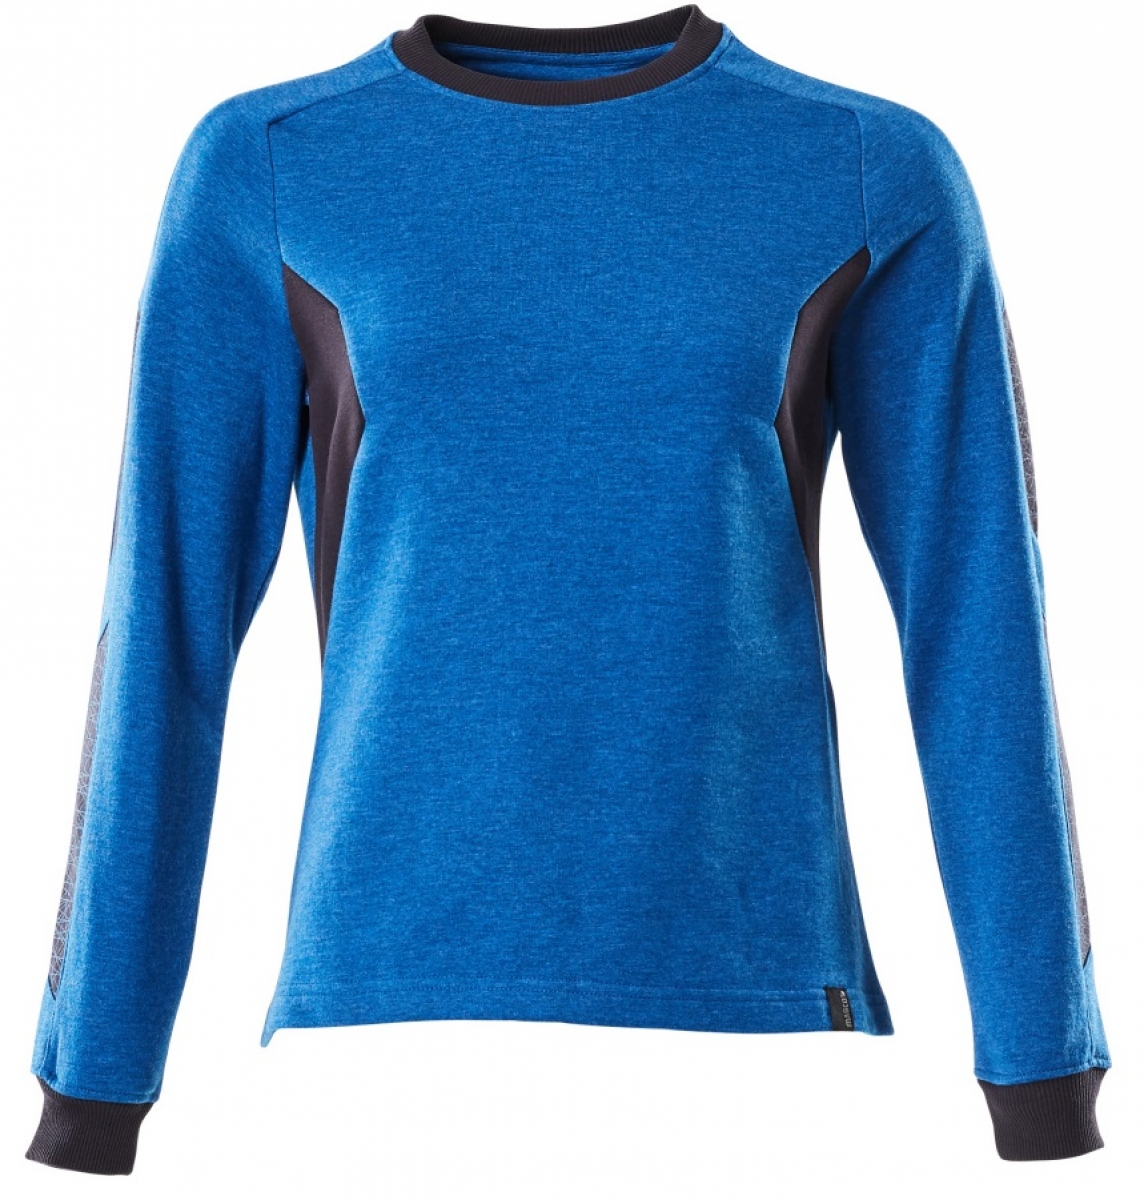 MASCOT-Worker-Shirts, Damen-Sweatshirt, 310 g/m, azurblau/schwarzblau